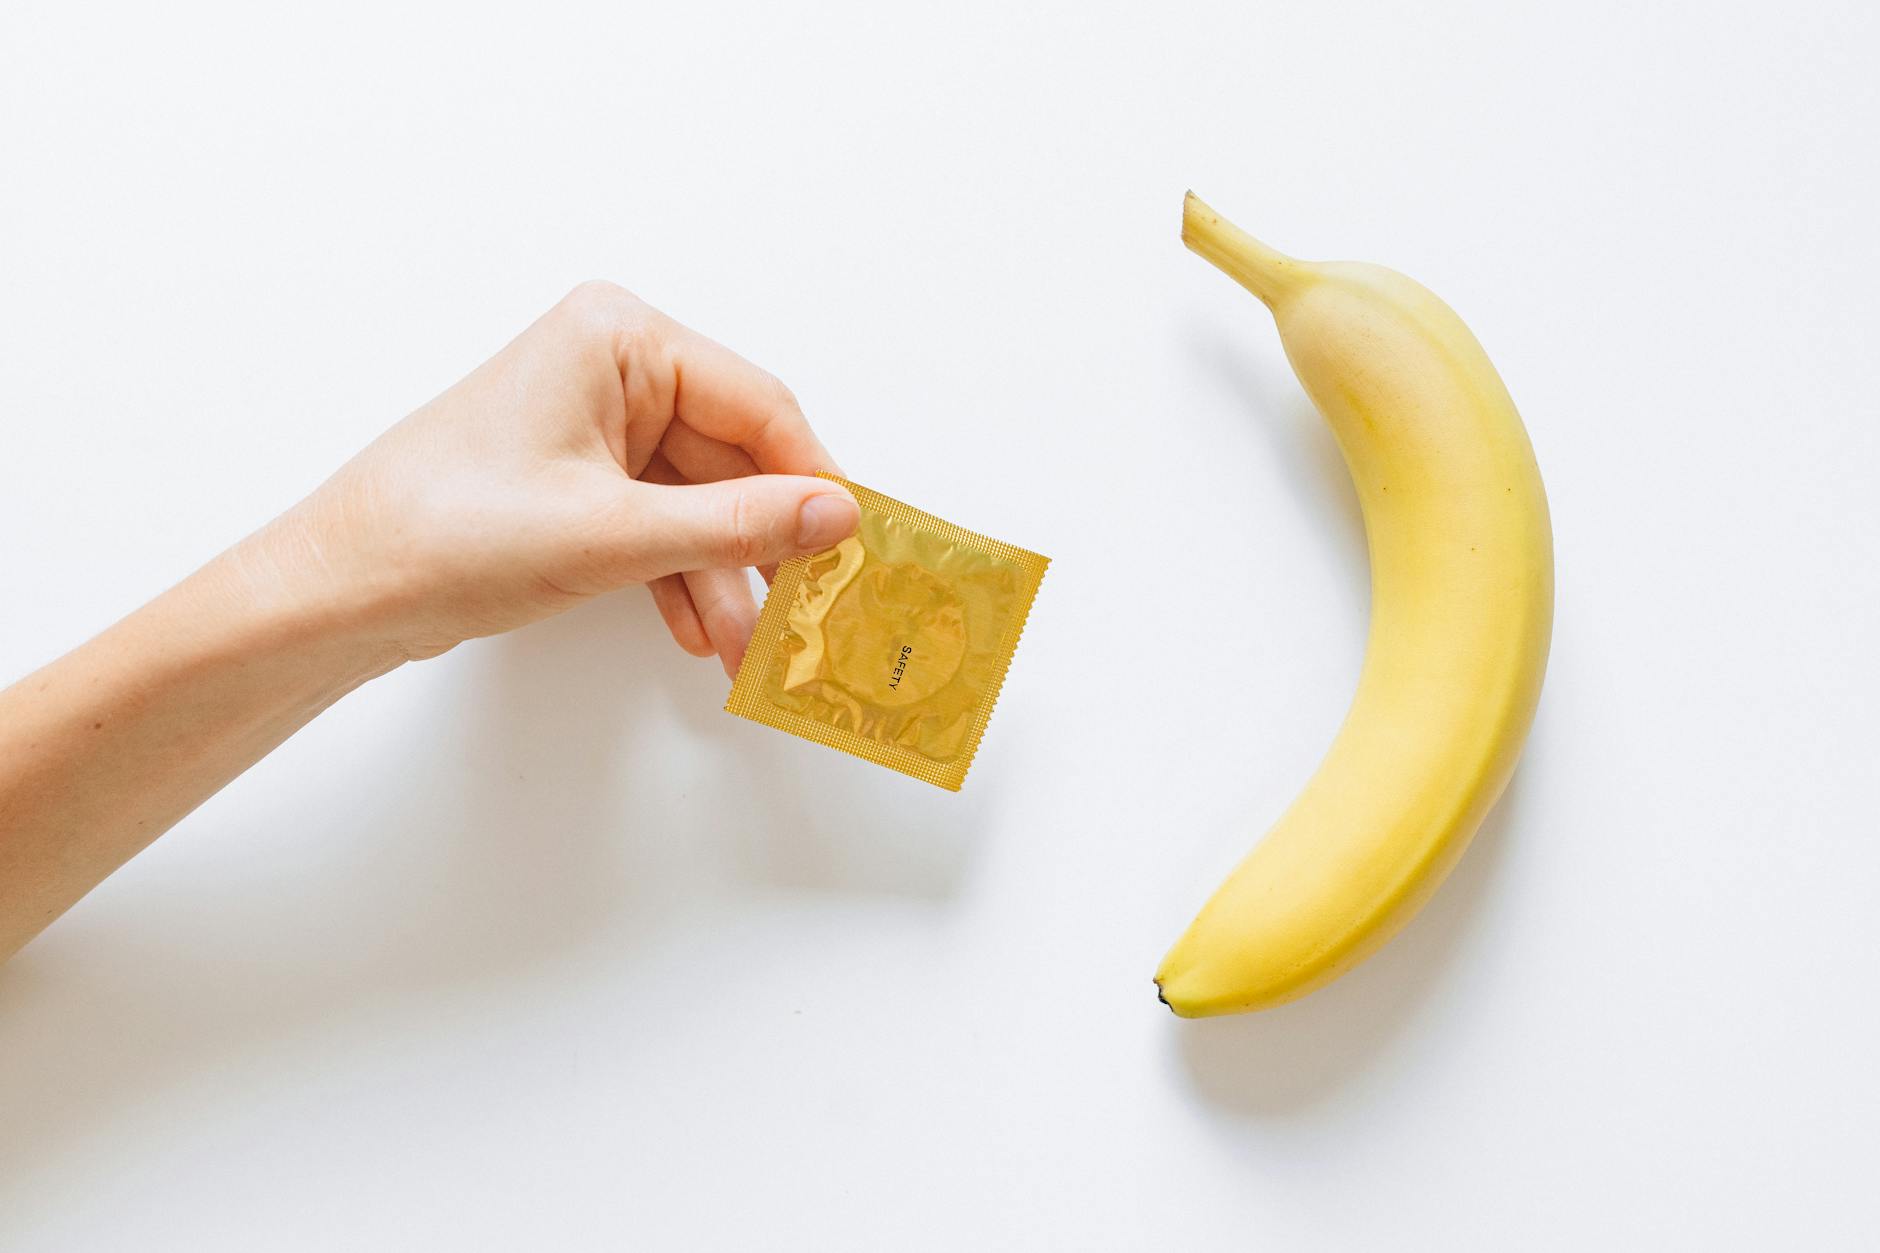 person holding condom next to banana